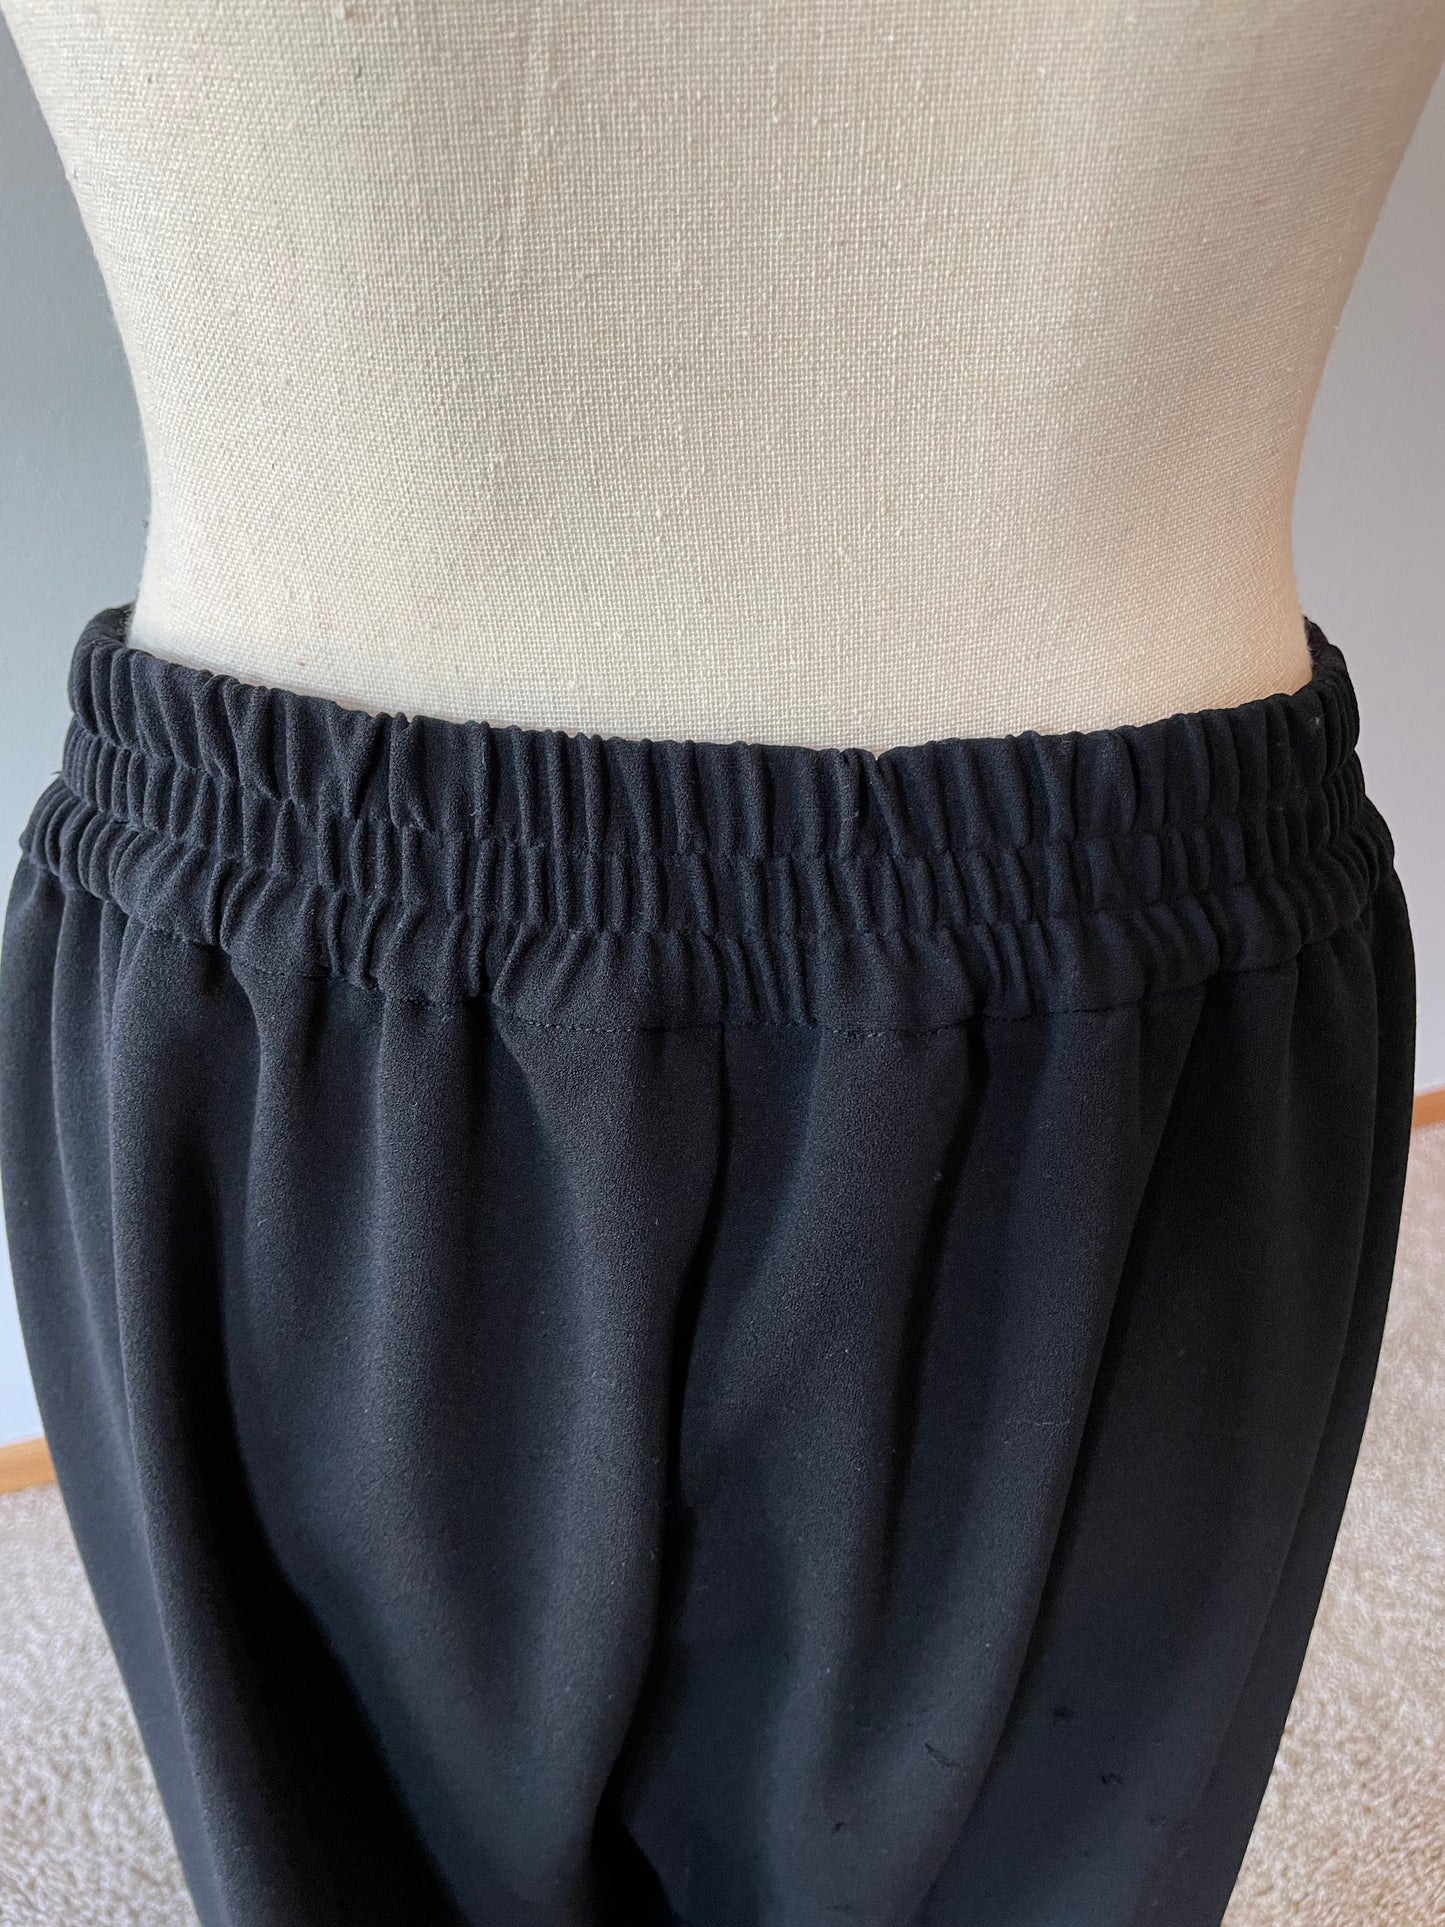 Worthington Dress Pants (16)